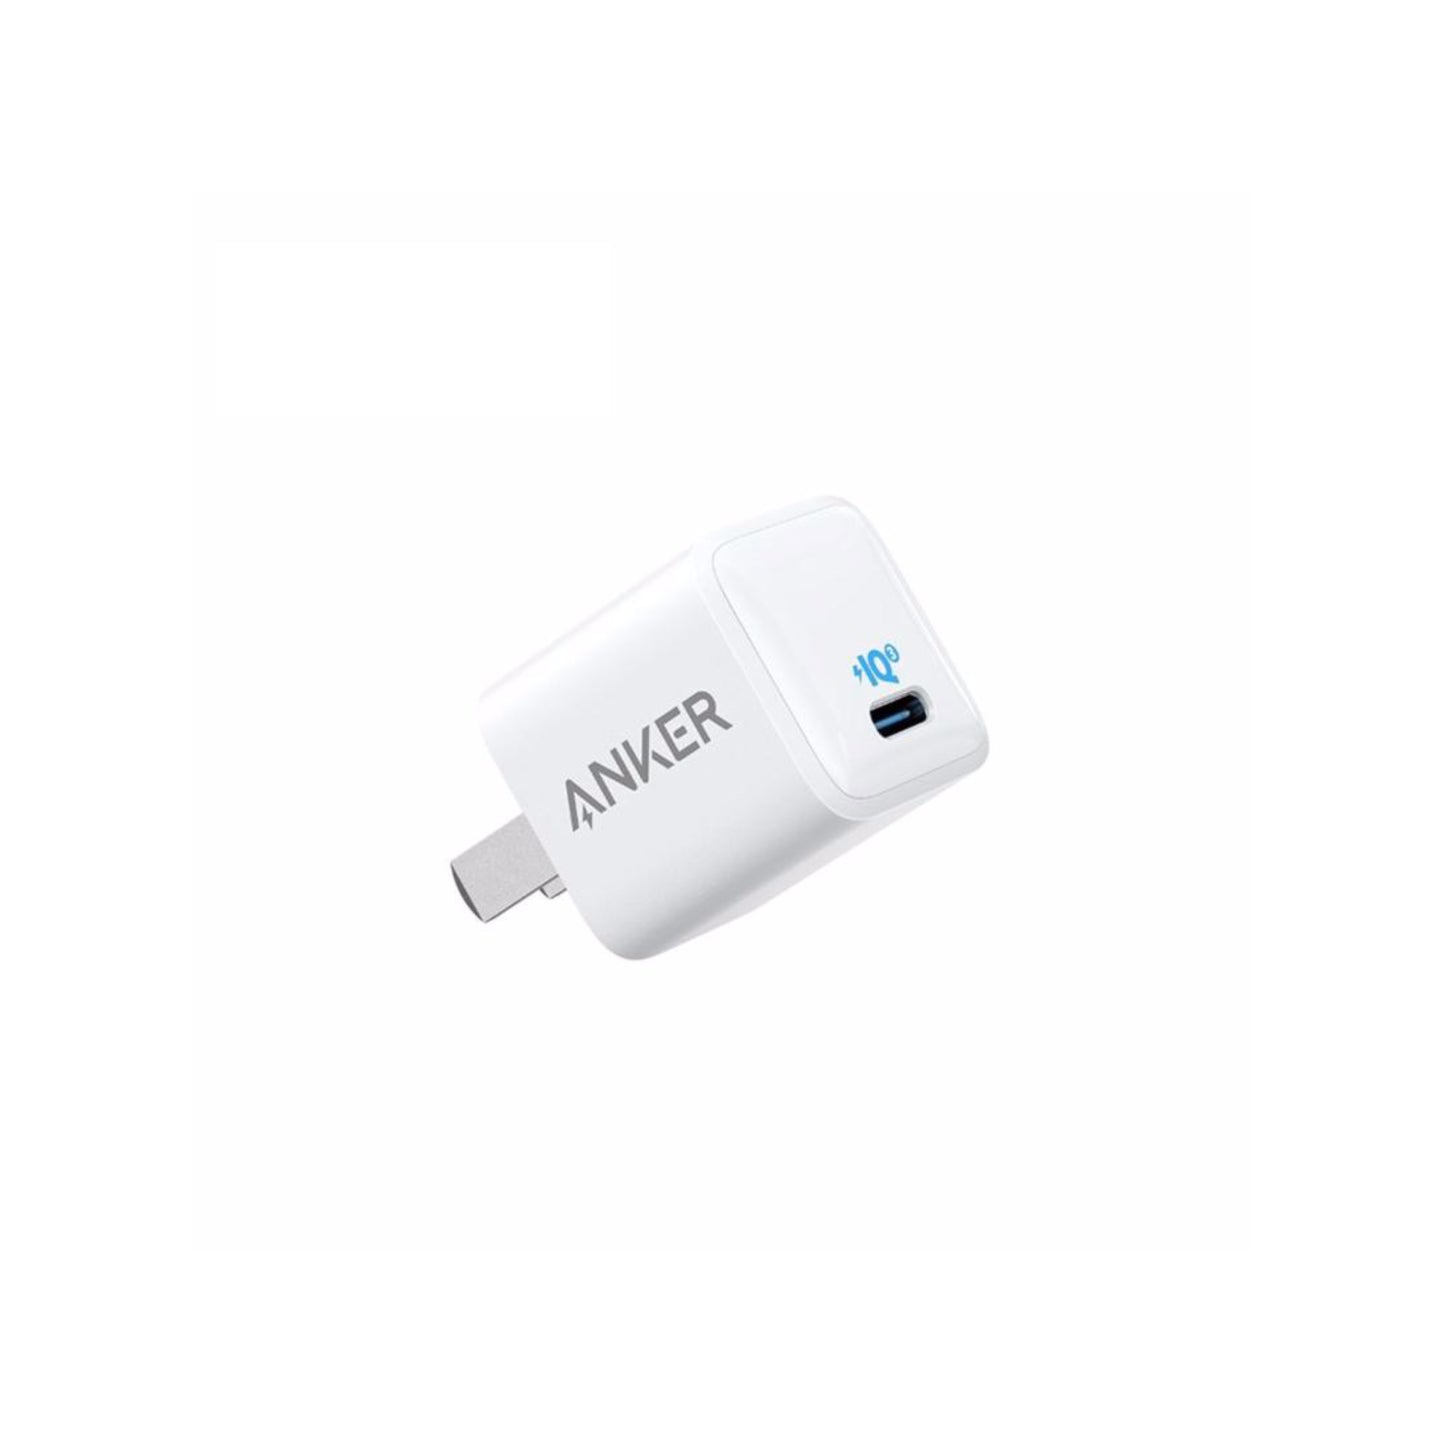 ANKER PowerPort III Nano 20W USB-C Wall Charger - White